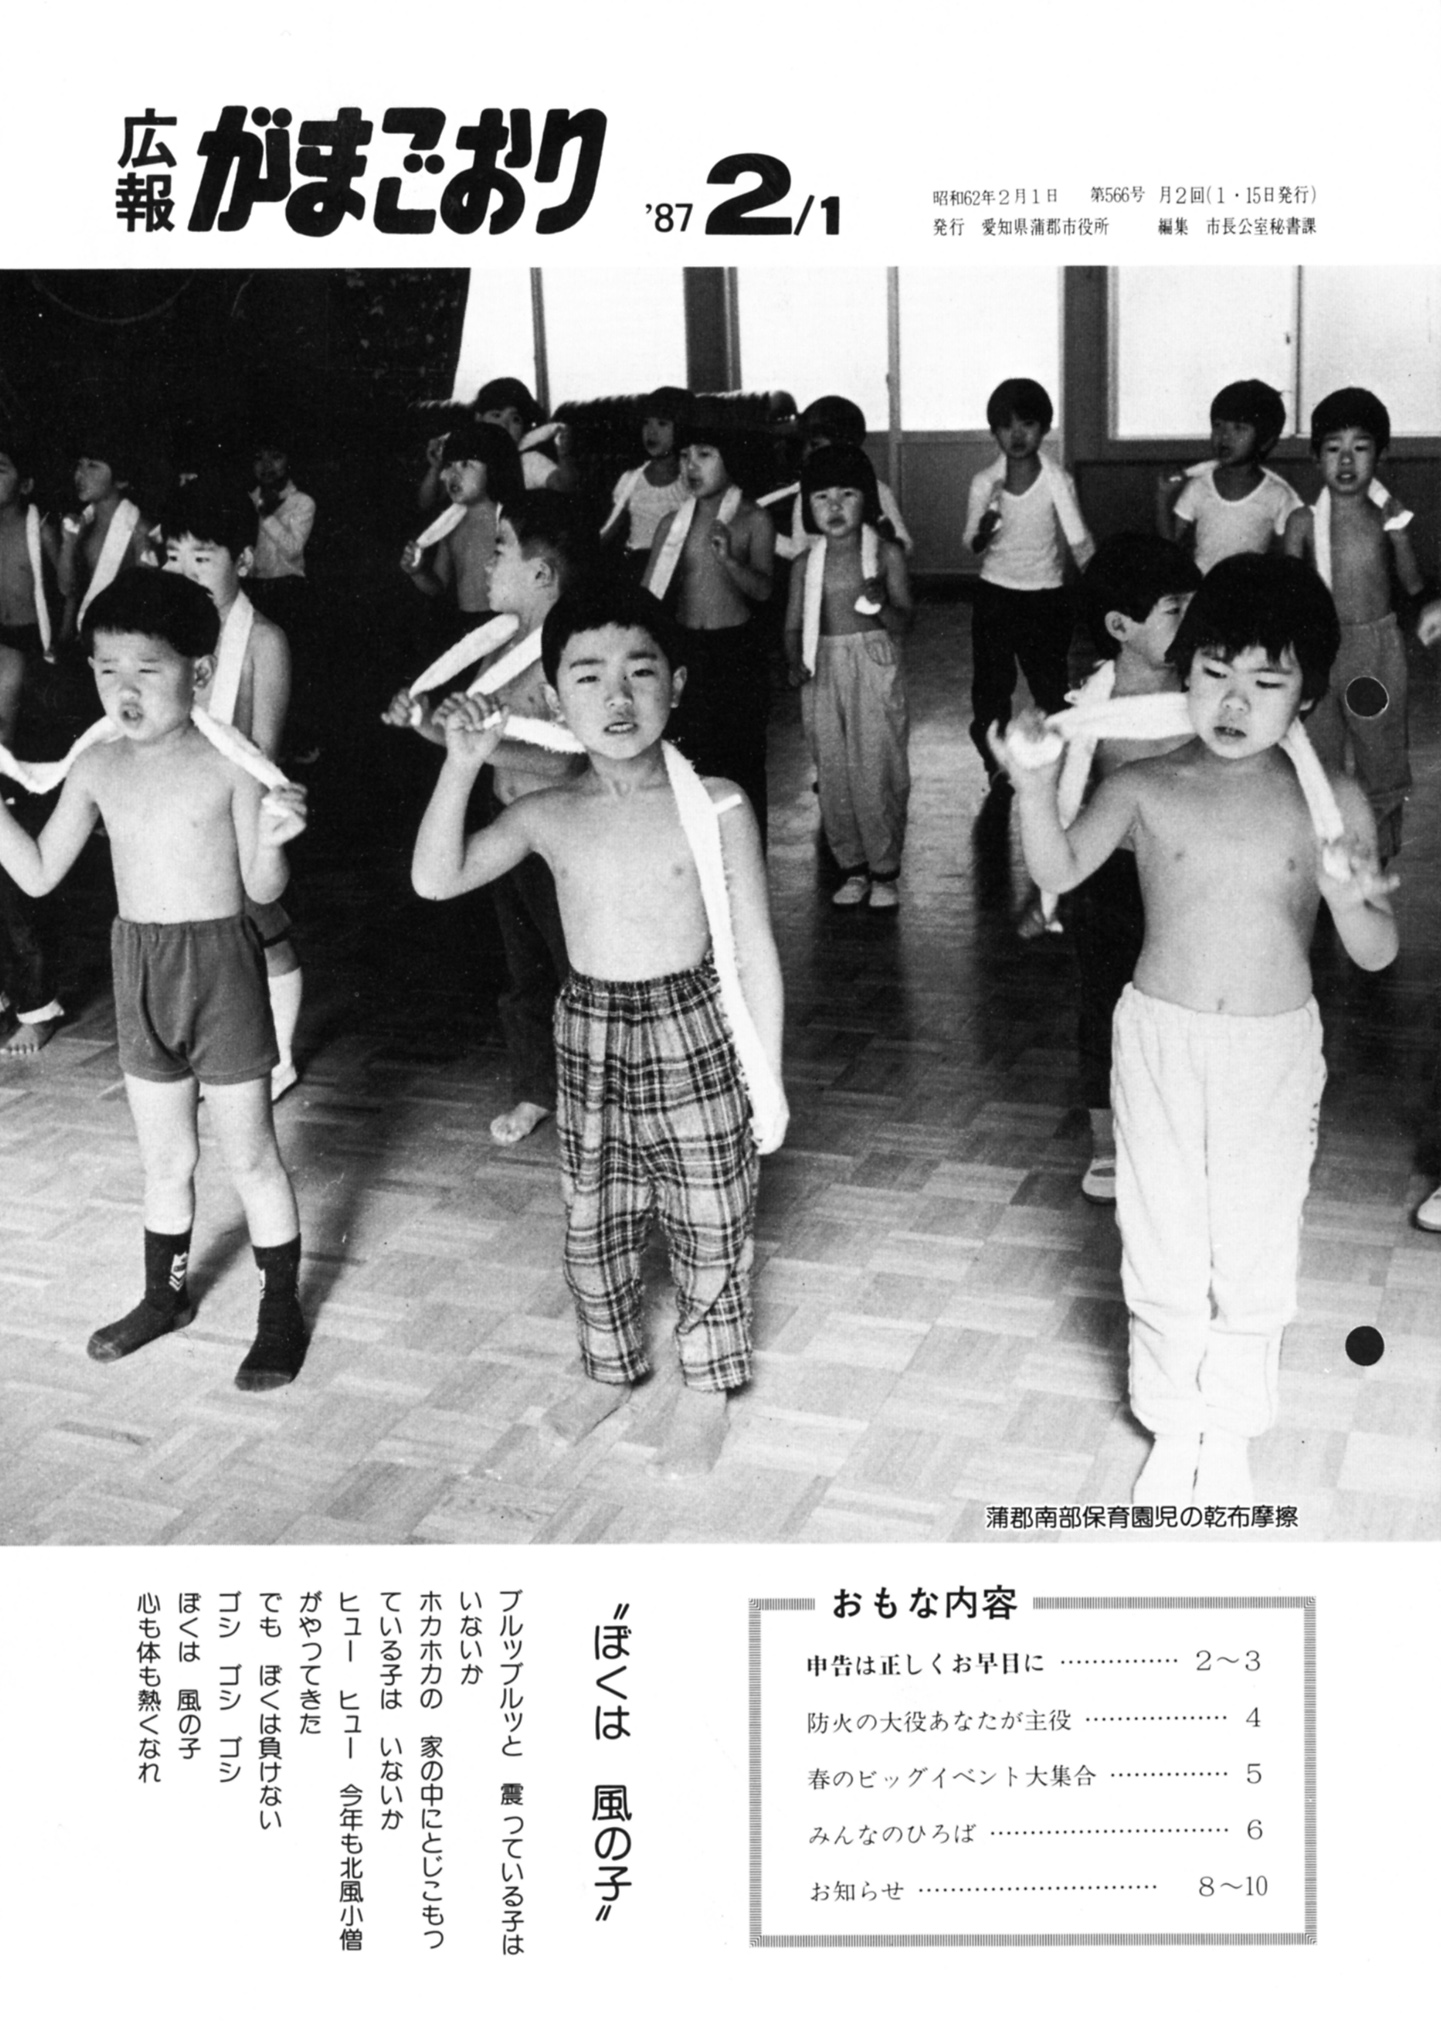 JS小学生高学年全裸　乾布摩擦 広報がまごおり（昭和62年2月） - 愛知県蒲郡市公式ホームページ